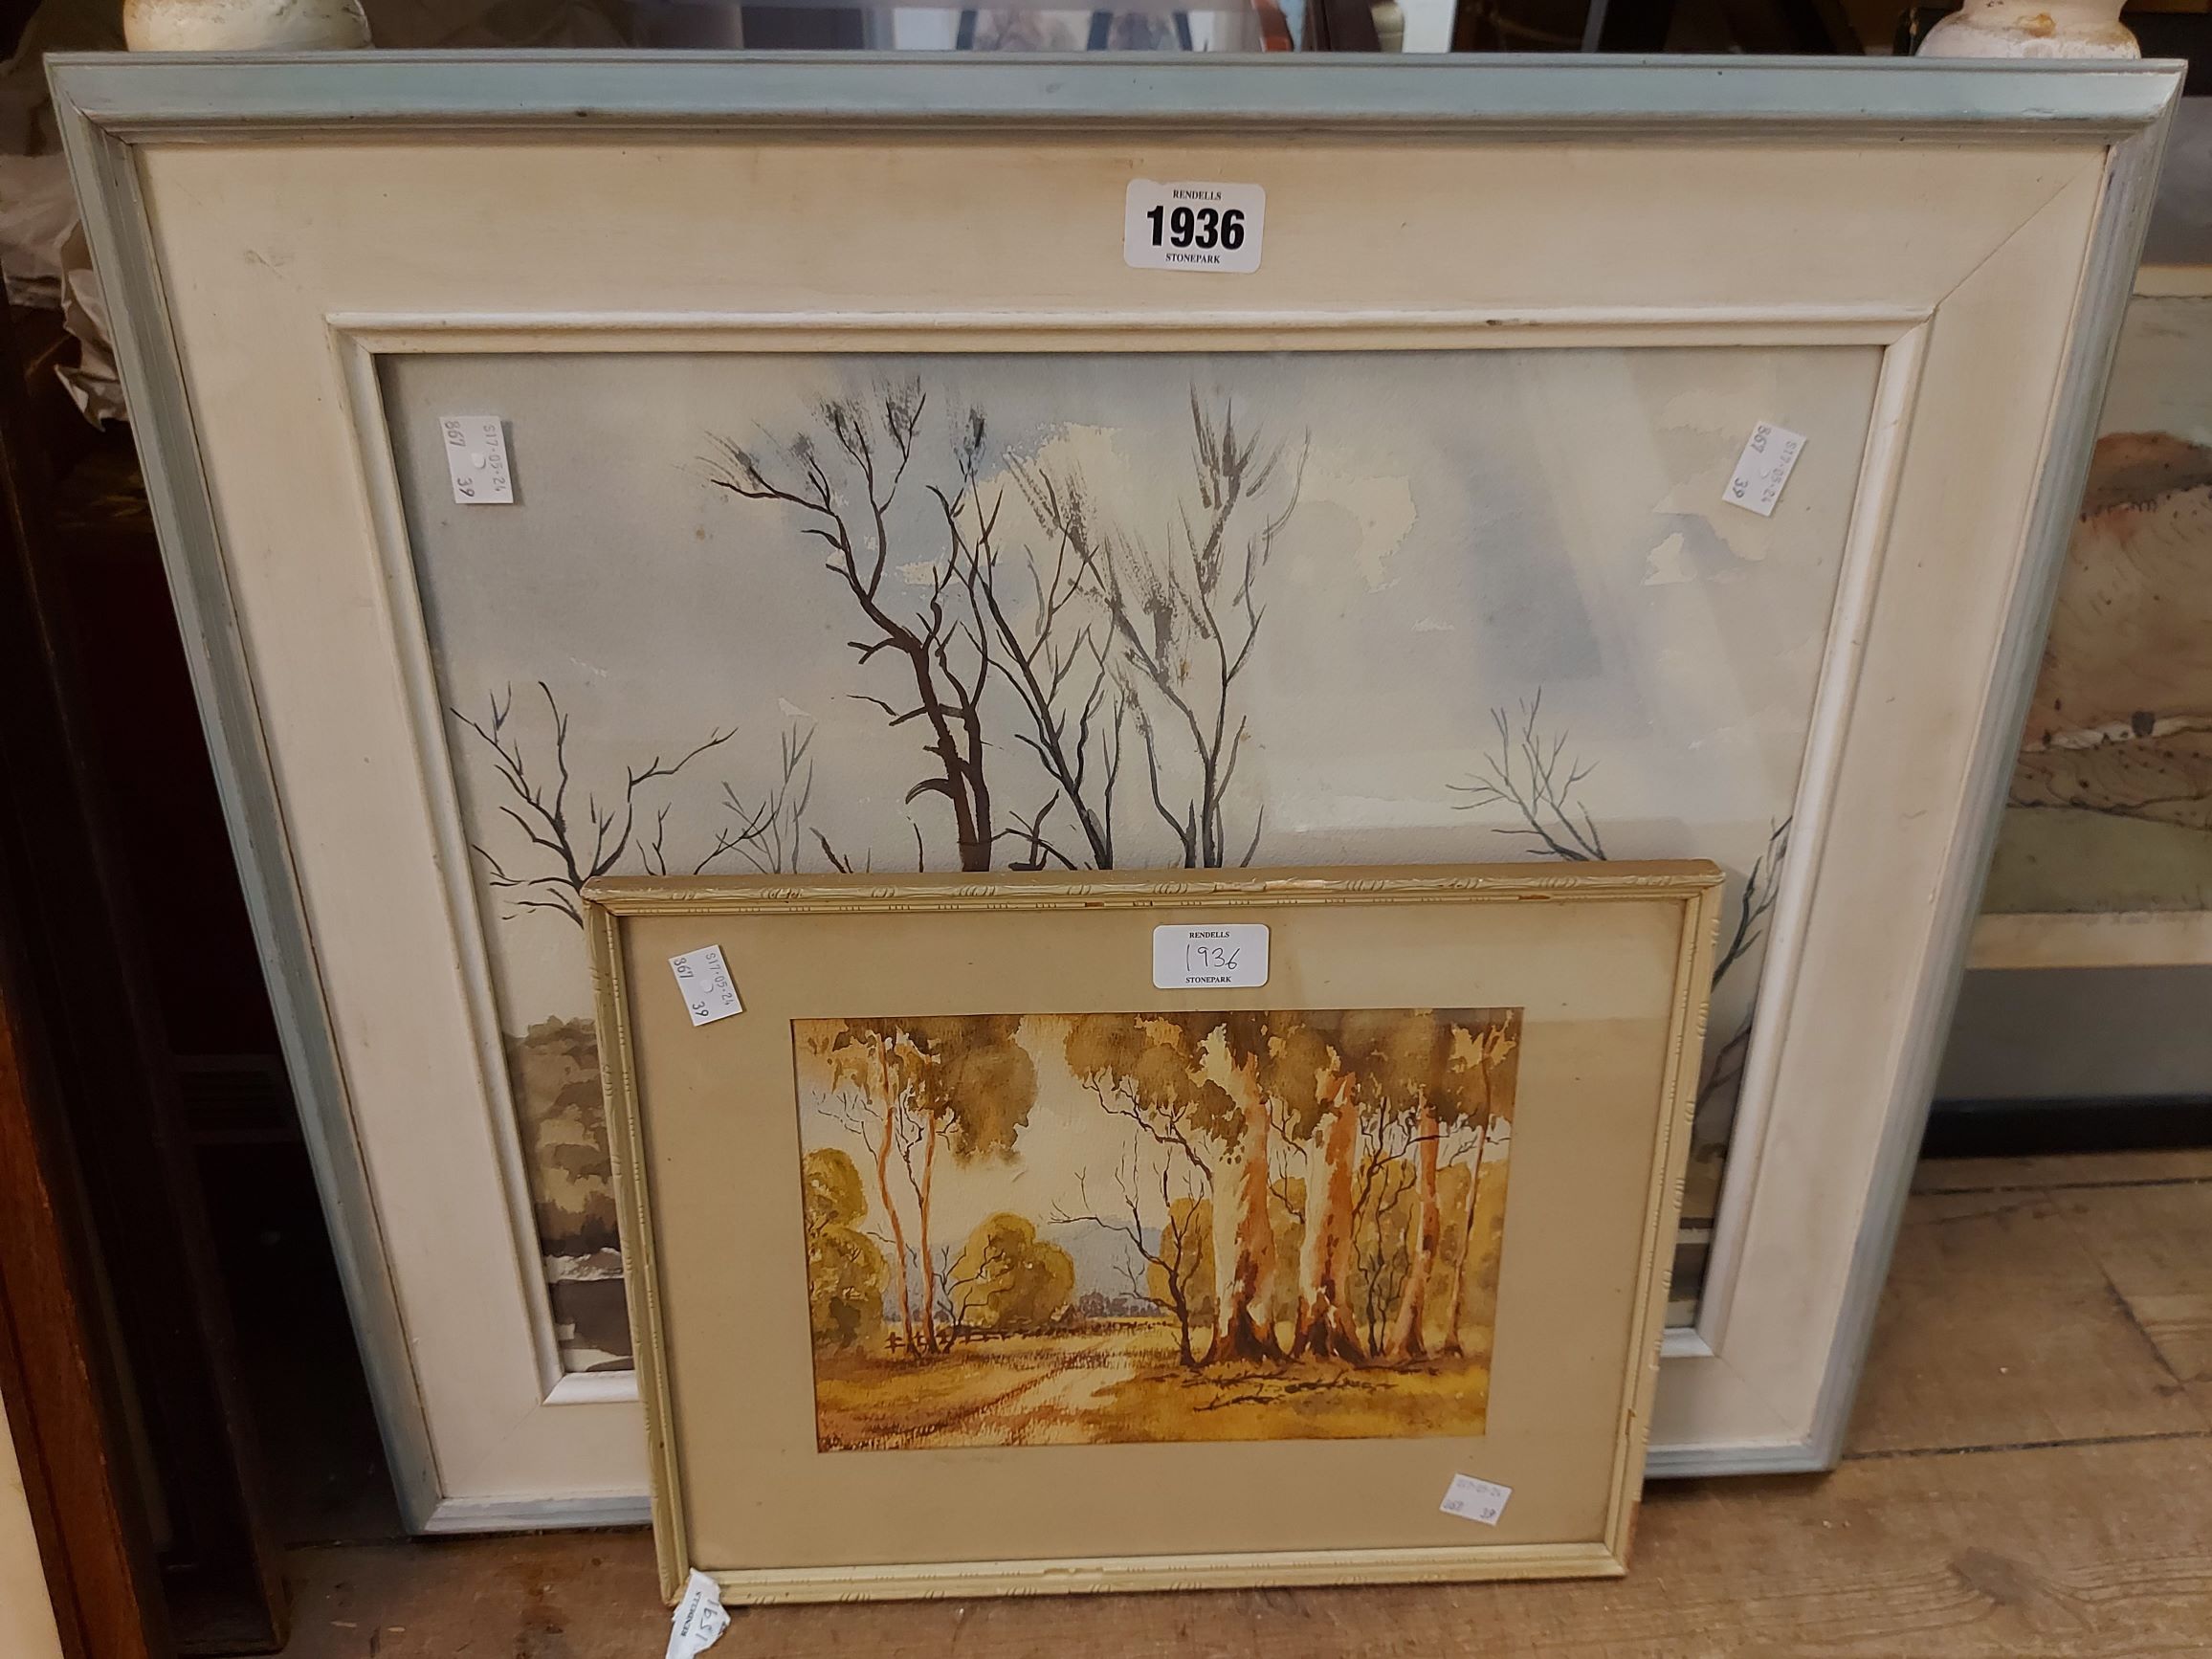 Harry Buckie (Australian): a framed watercolour, depicting a woodland riverbank - details verso -